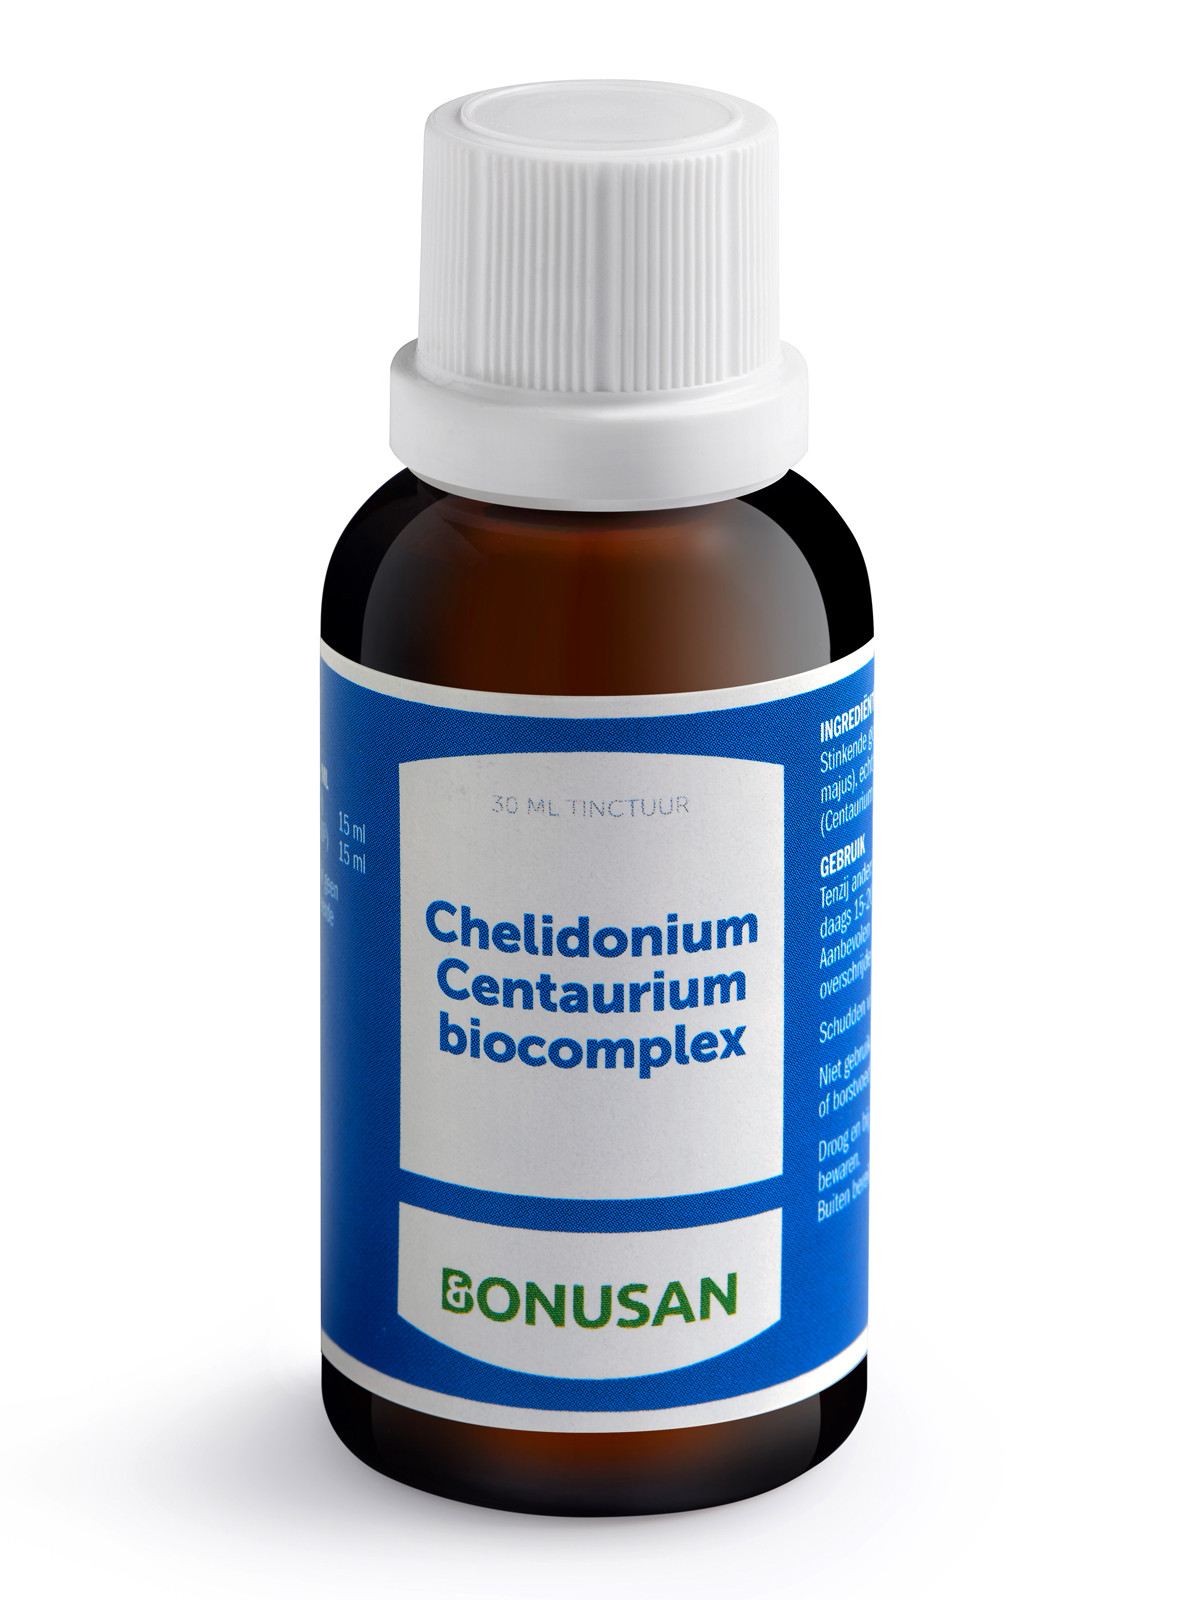 Bonusan - Chelidonium centaurium biocomplex tinctuur (binnenkort uit het assortiment)